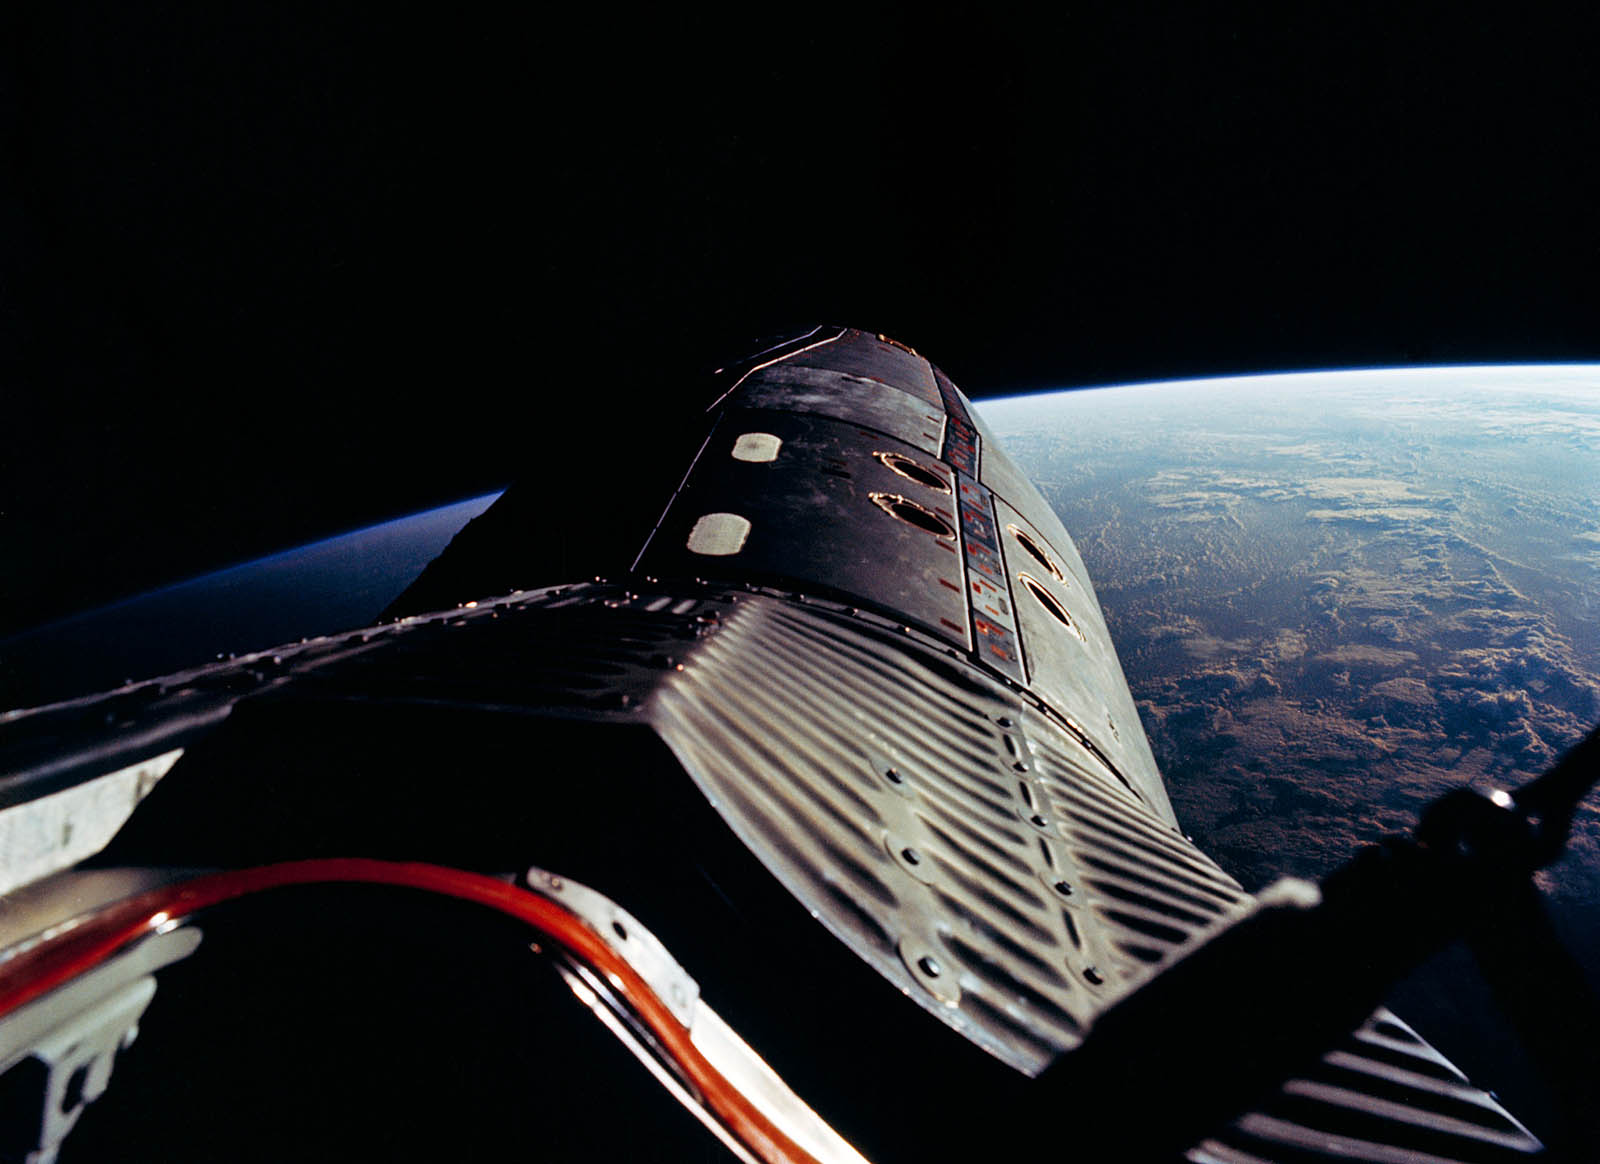 Rymdkapseln Gemini 12. Foto: NASA, CC BY 2.0